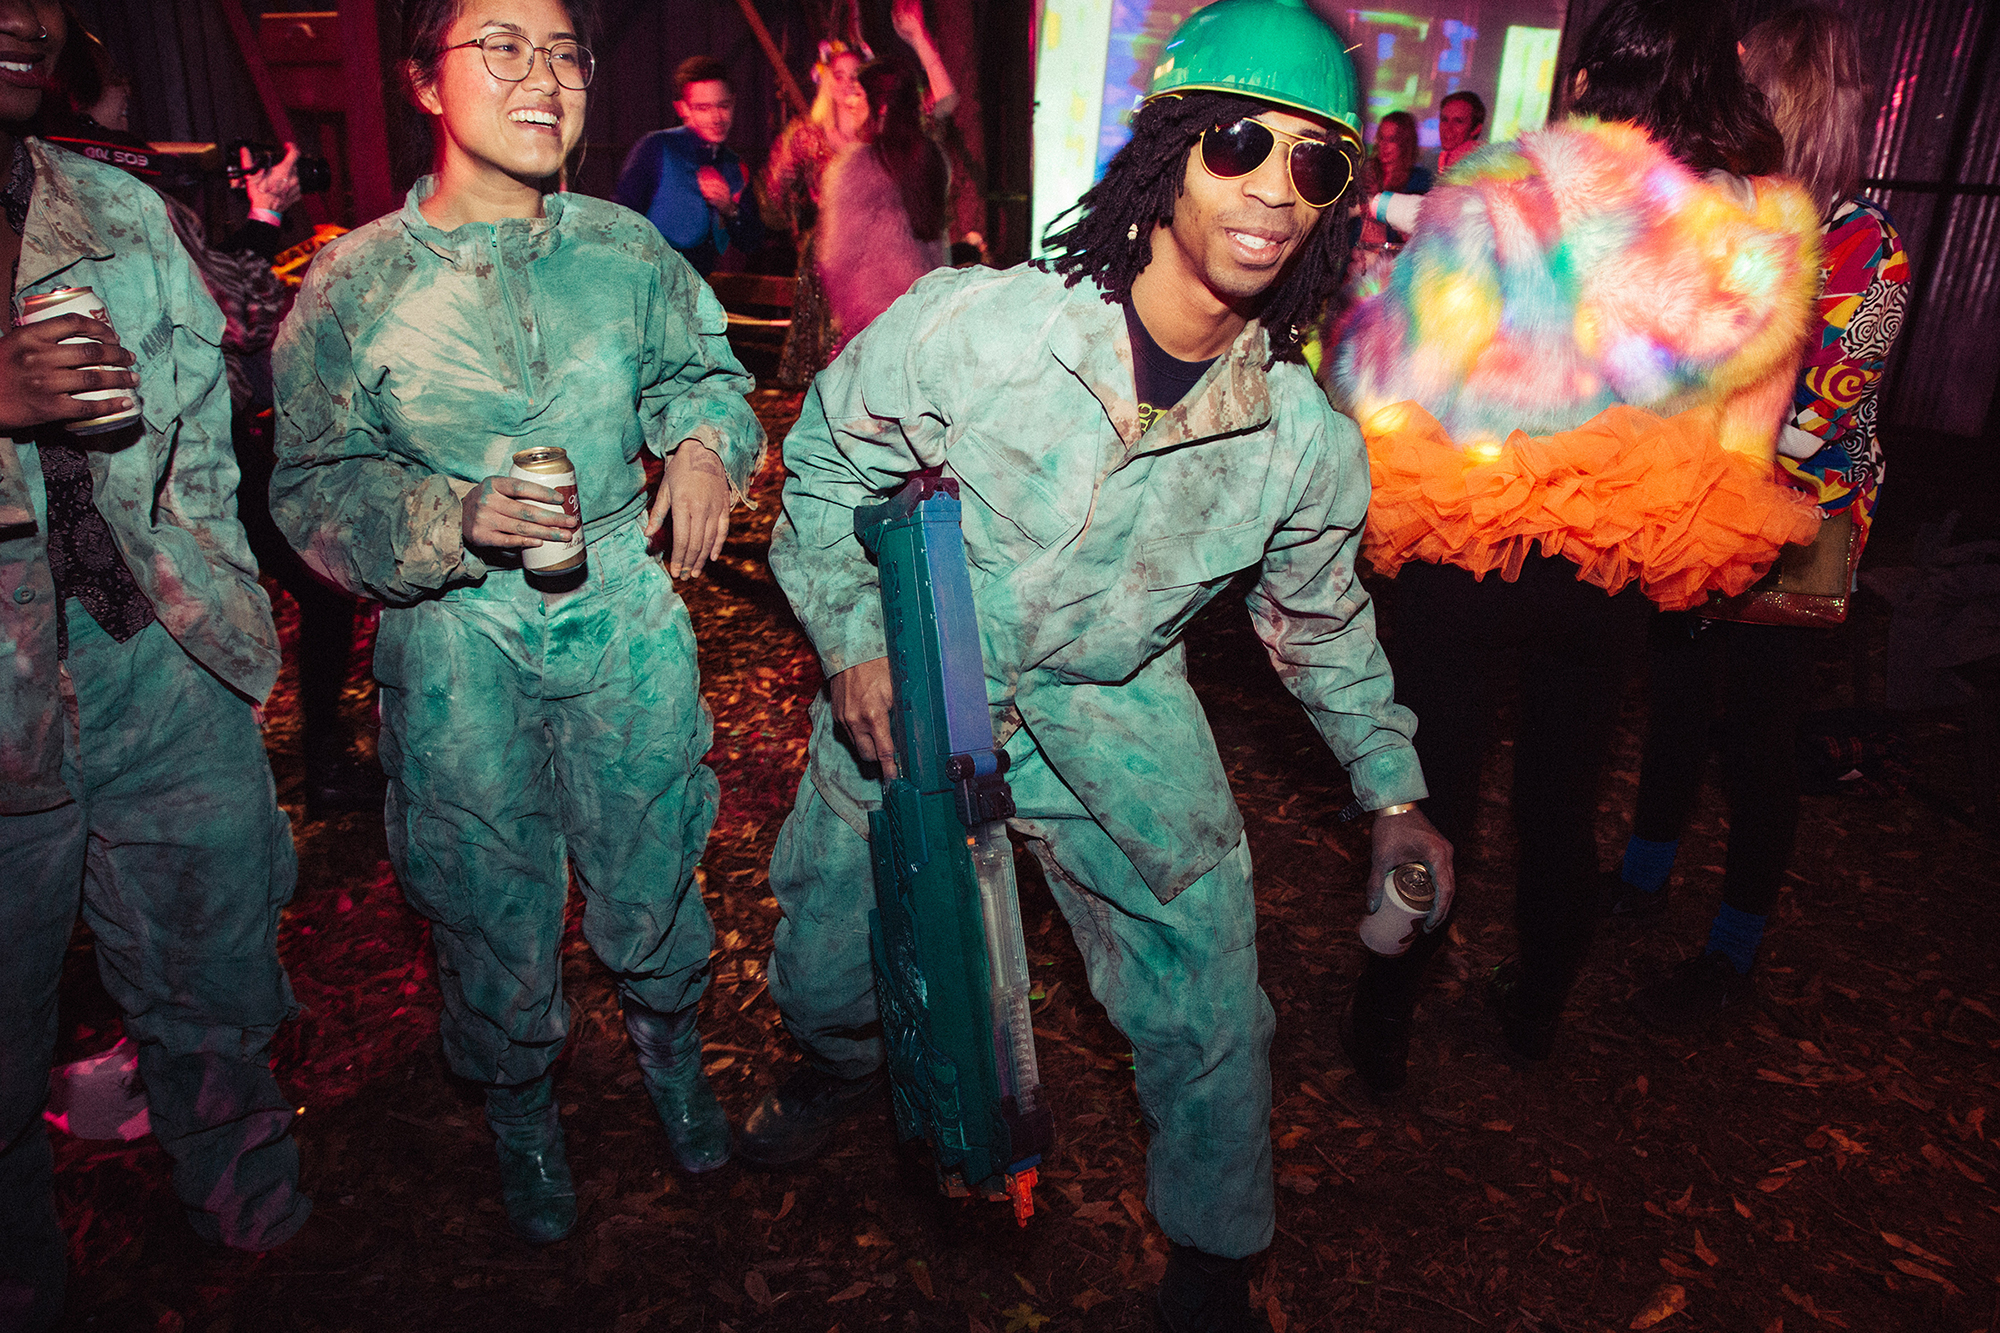 Inside a Vaporwave Carnival Ball in New Orleans